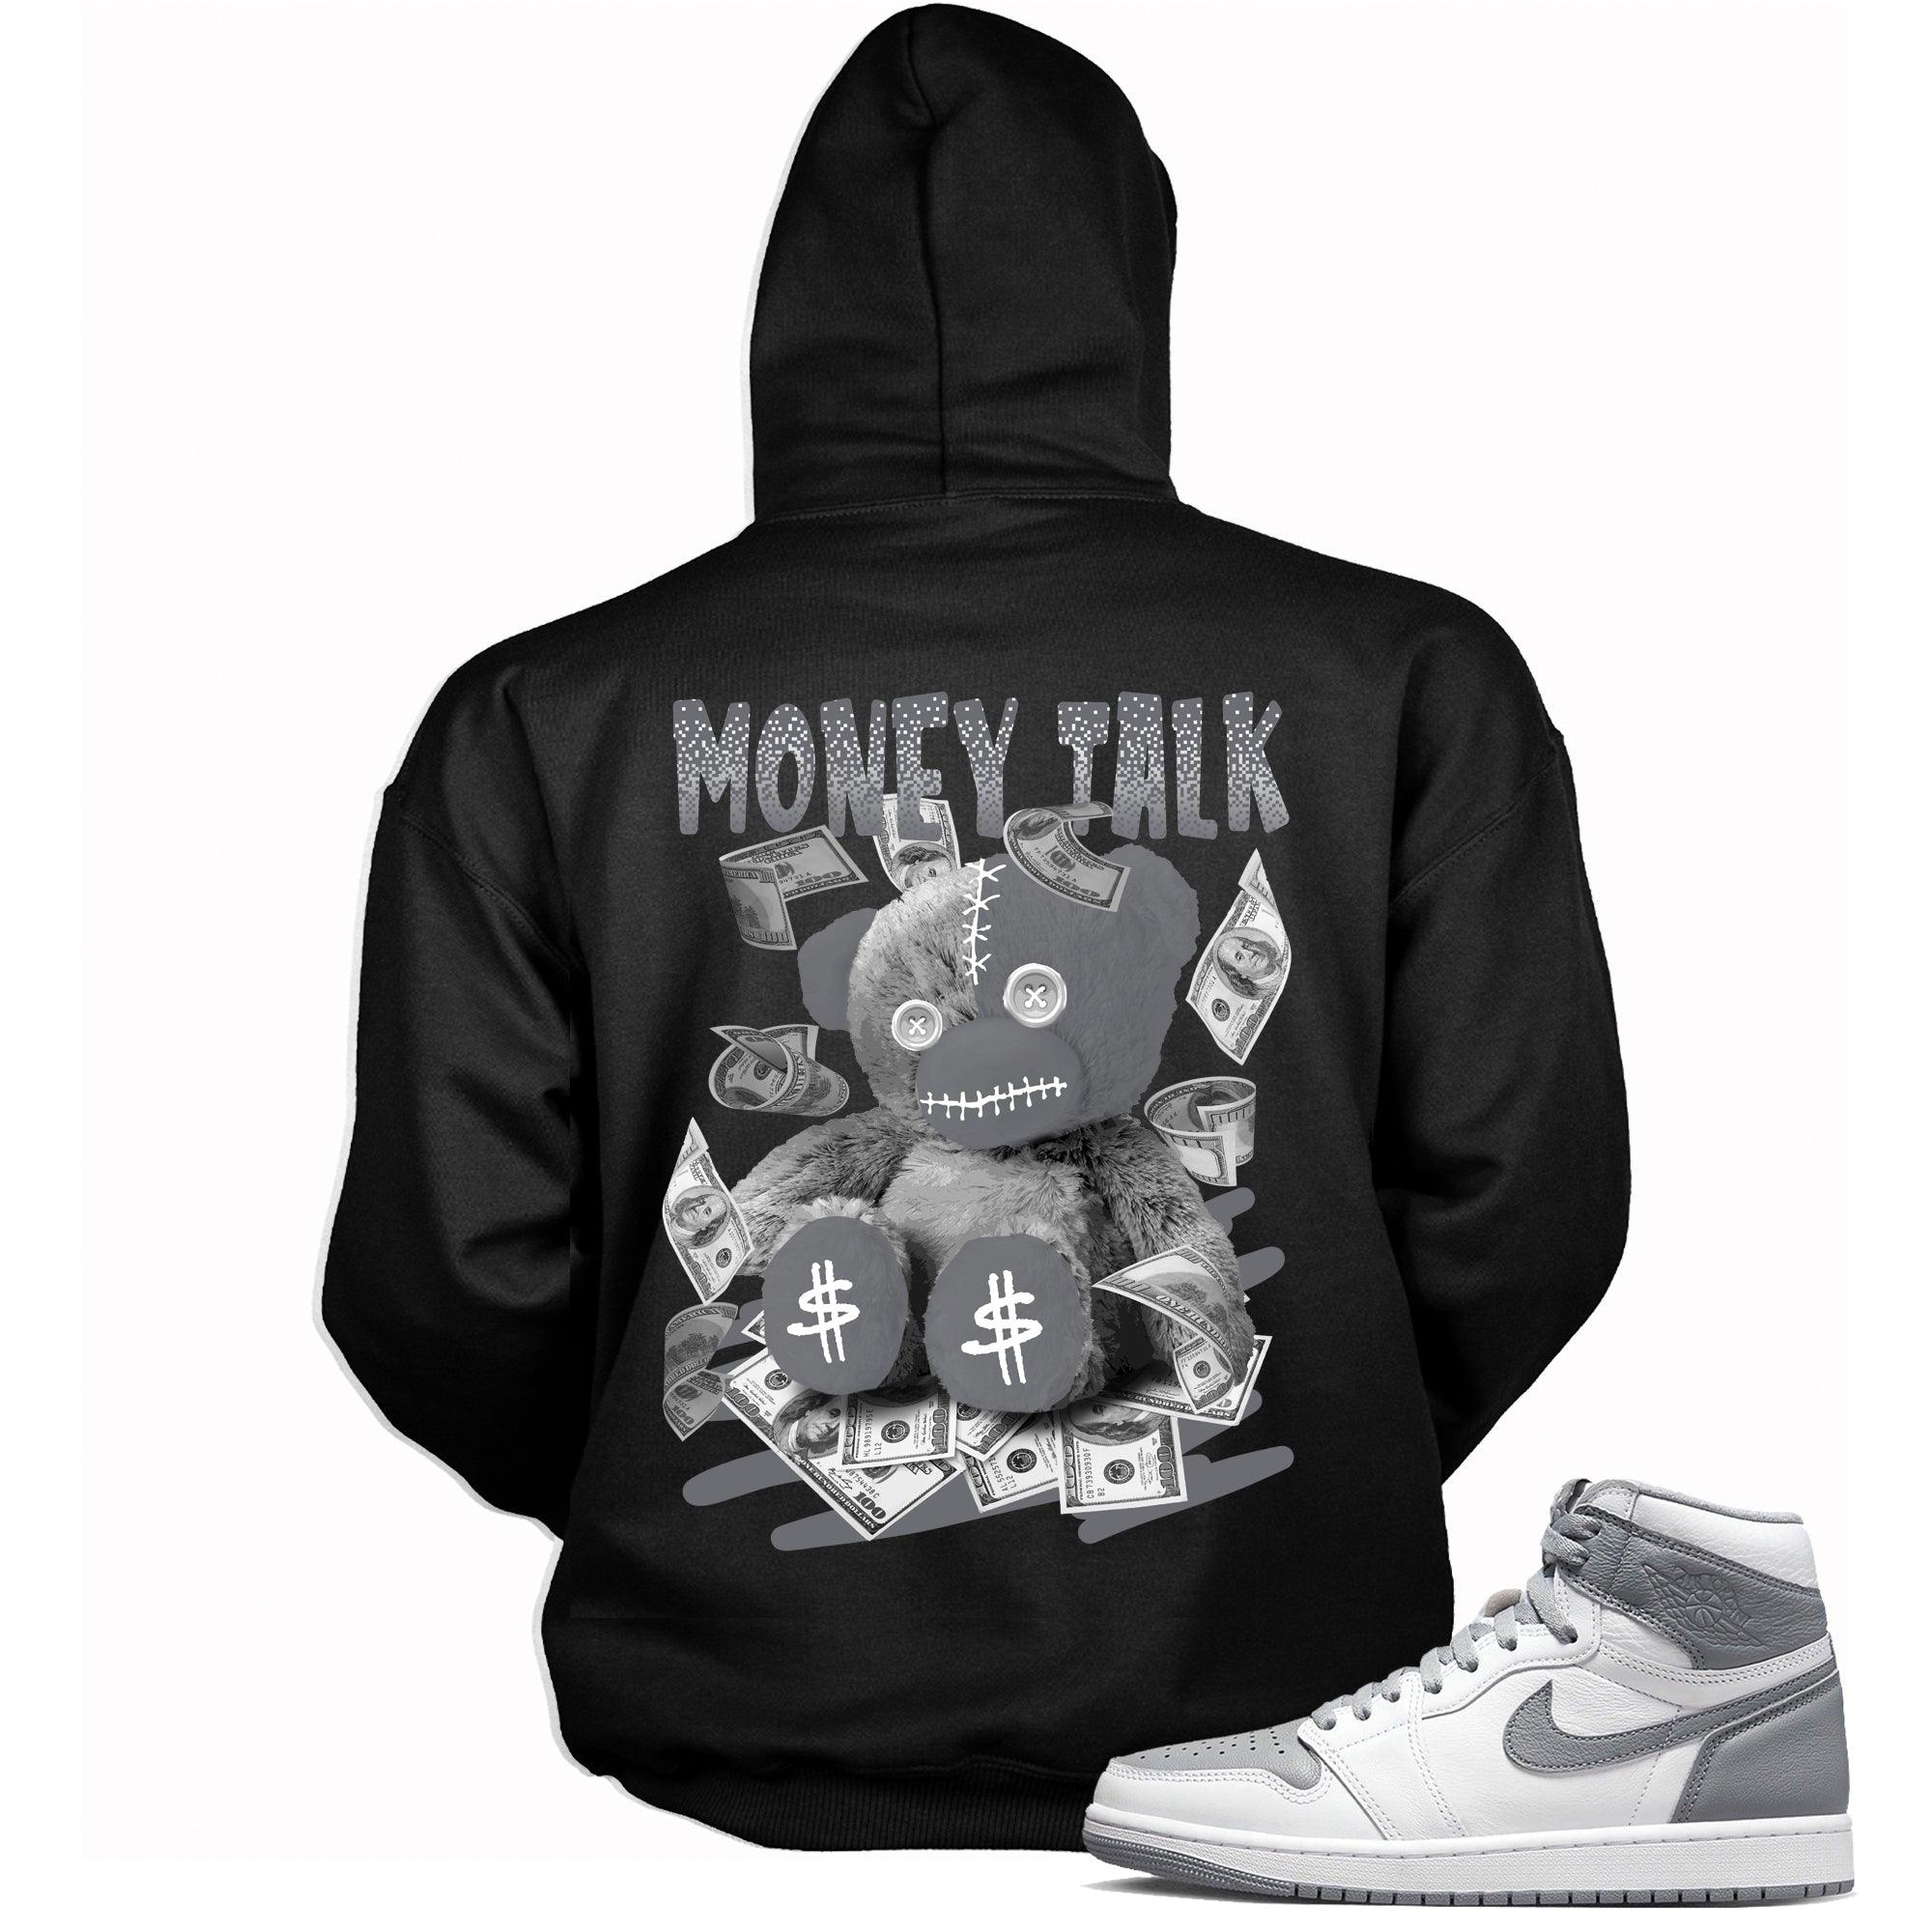 Money Talk Bear Sneaker Hoodie for Jordan 1s photo